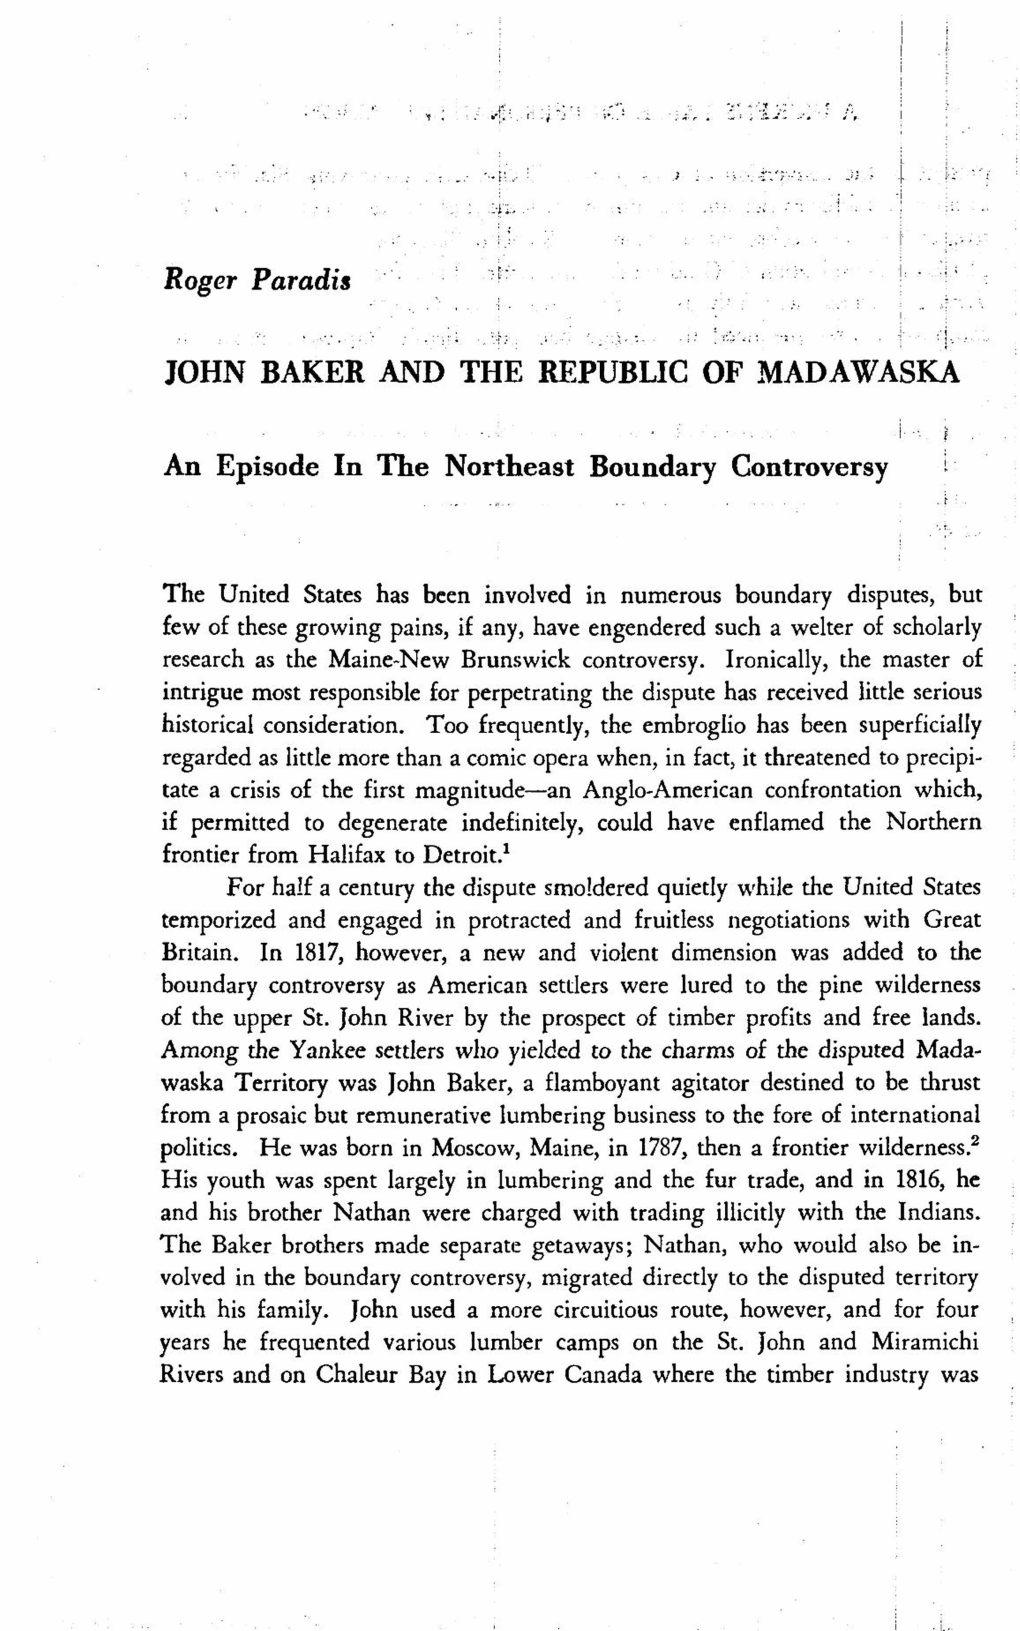 John Baker and the Republic of Madawaska